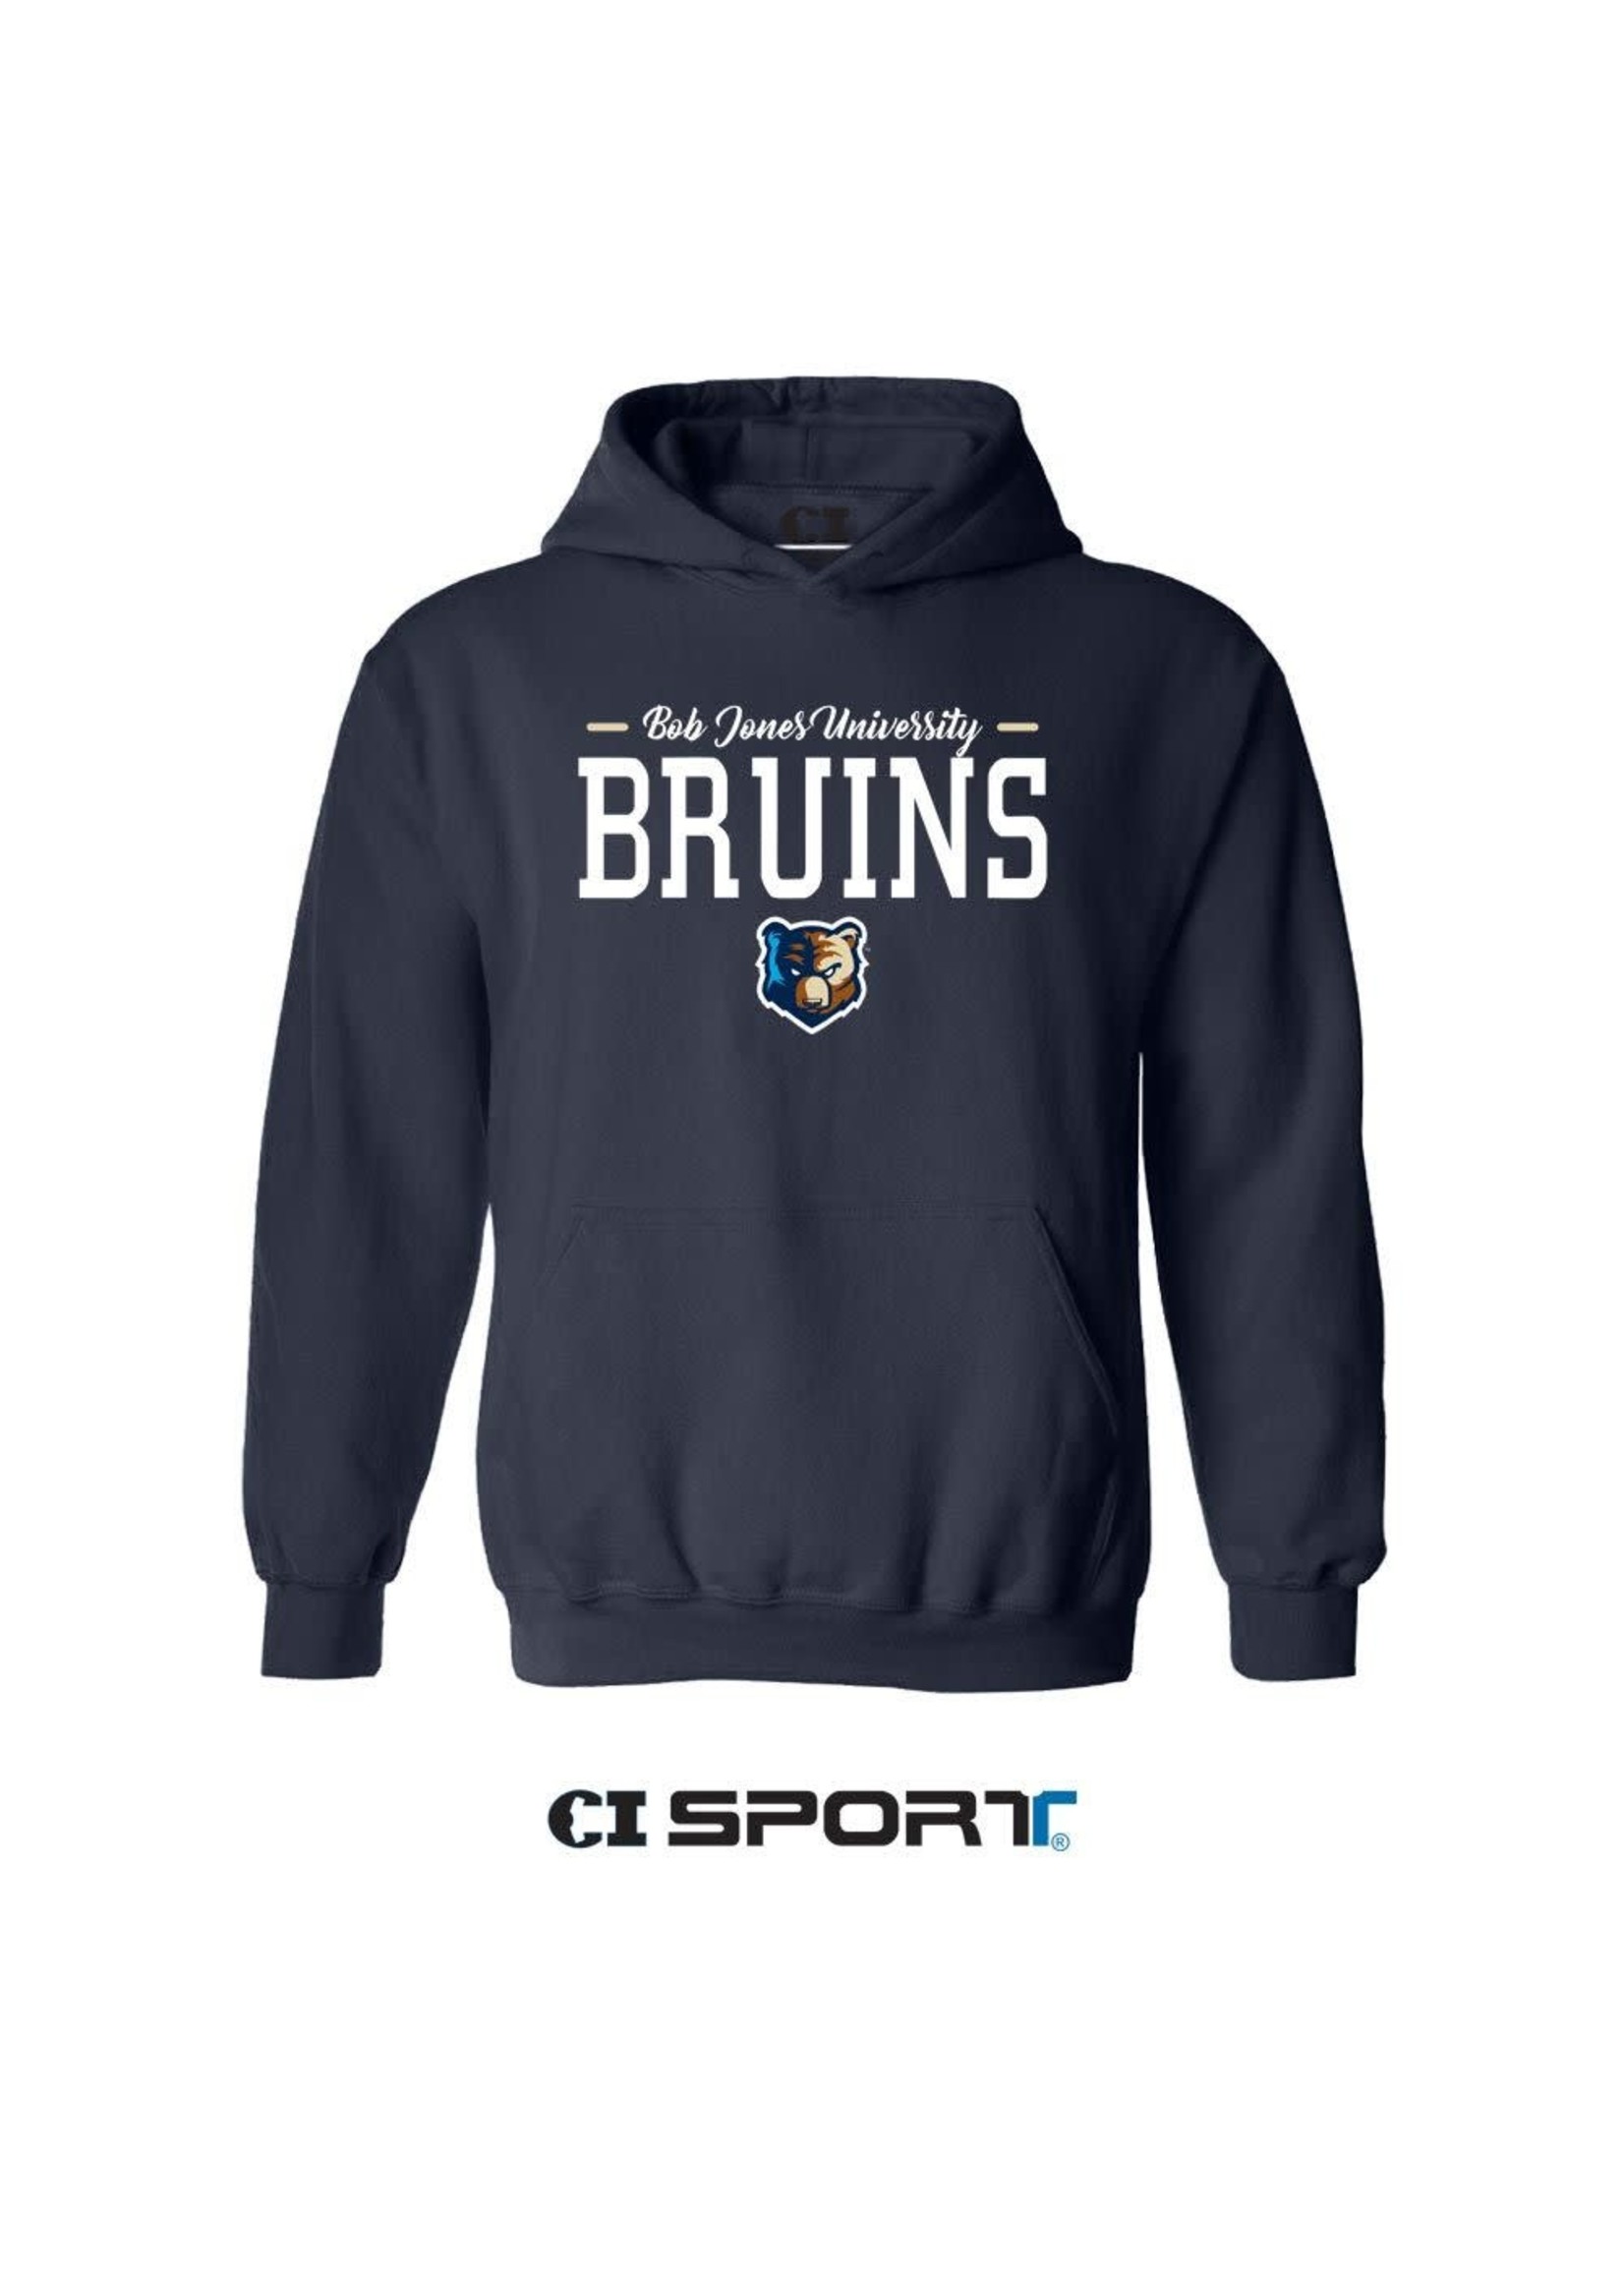 Bruins Soft Touch Hooded Sweatshirt